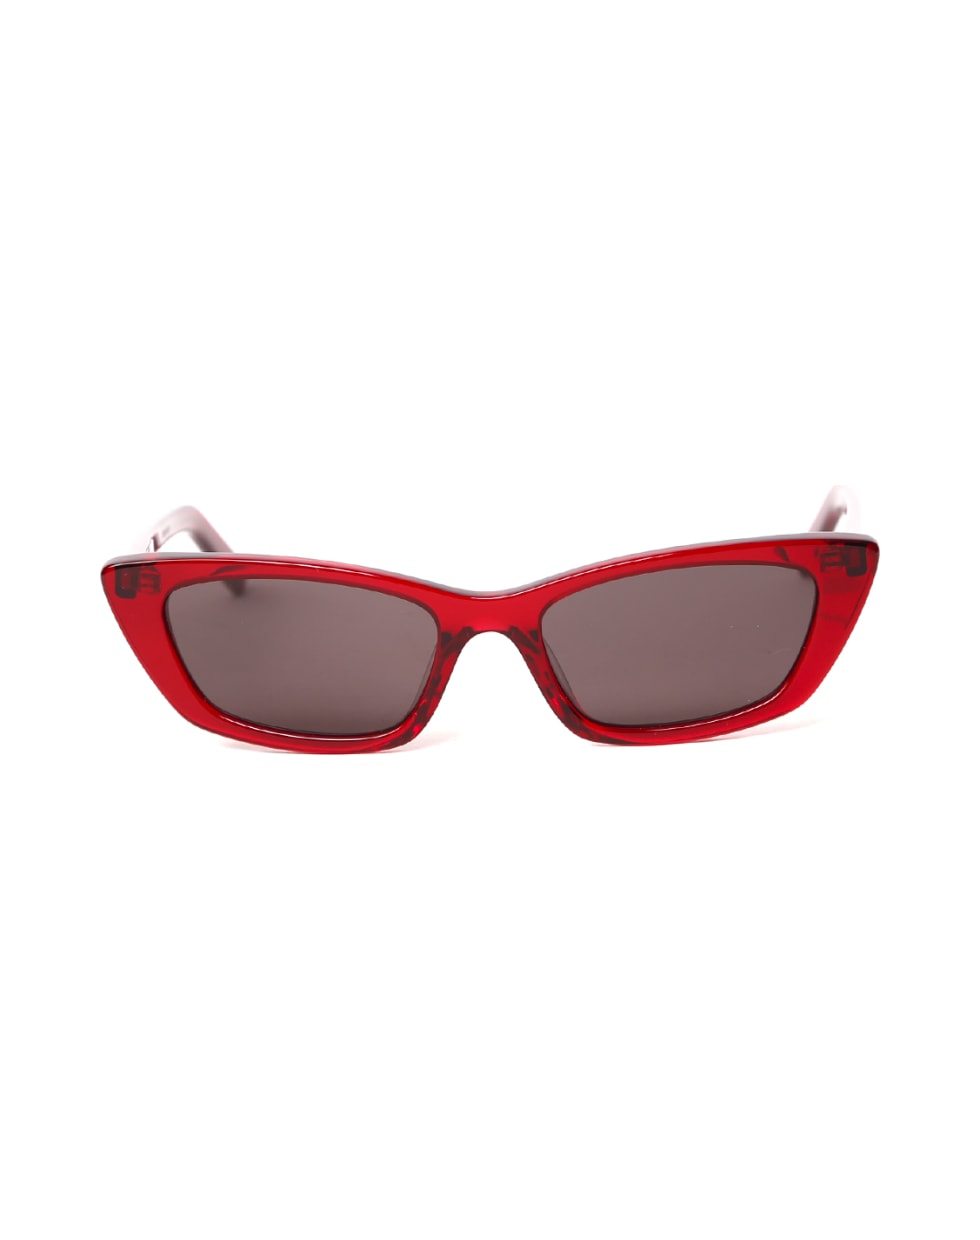 Saint Laurent Red Acetate Cat-eye Sunglasses - Red